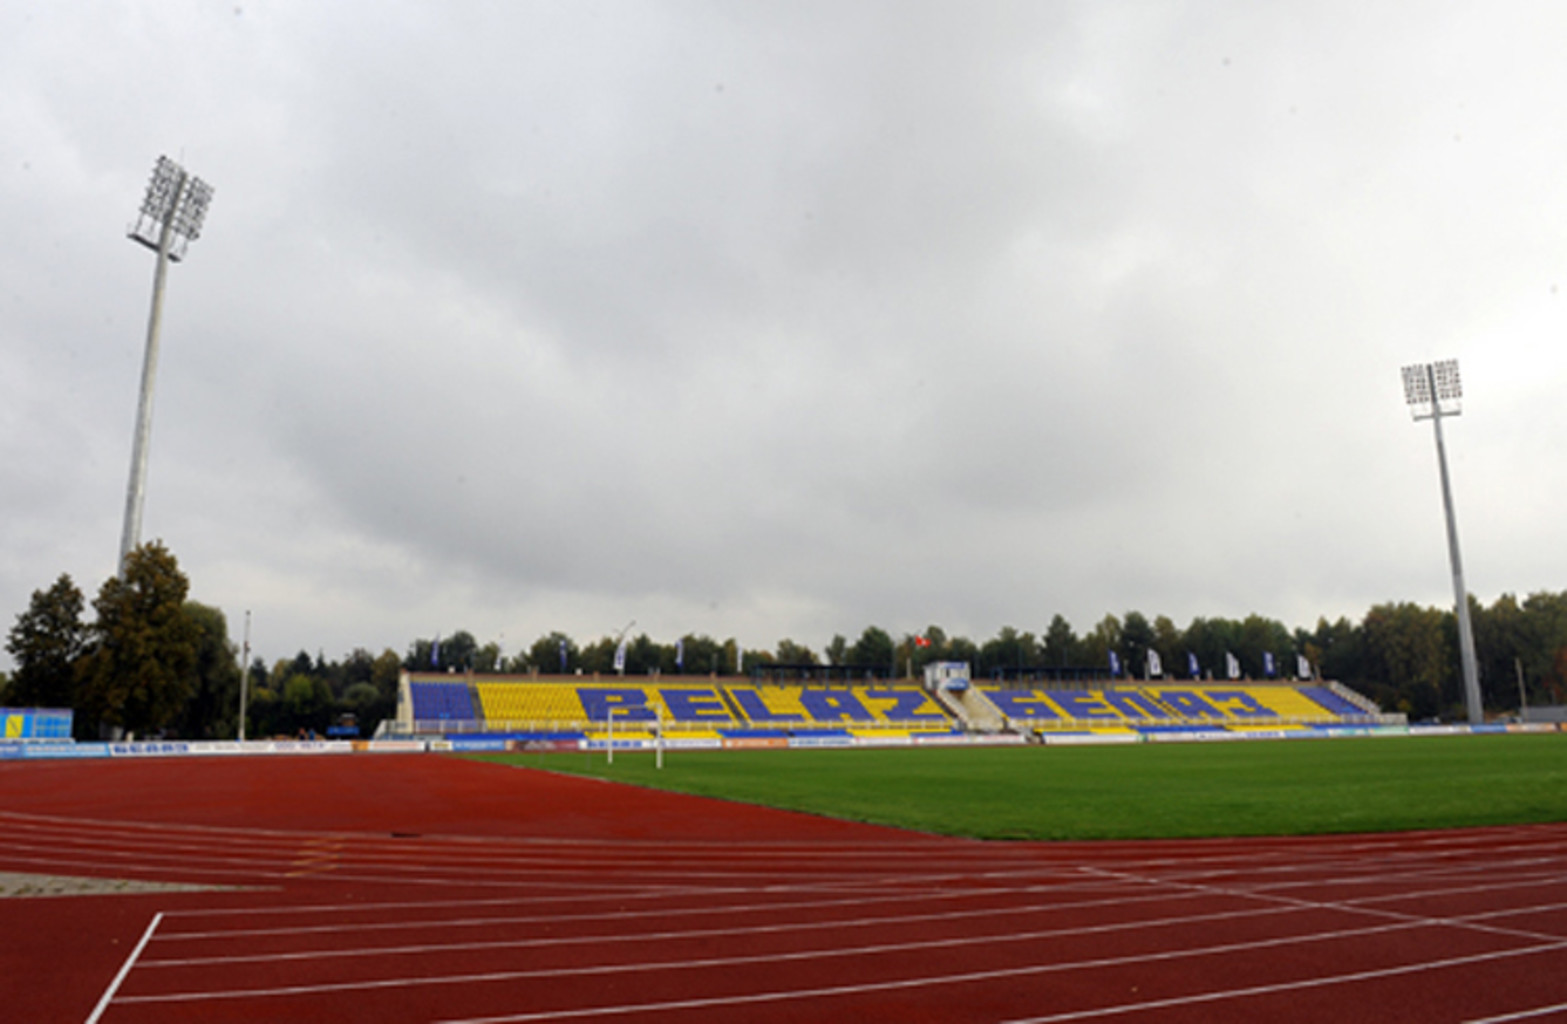 Летний стадион. Стадион Торпедо Жодино. Стадион Торпедо БЕЛАЗ Жодино. Жодино Белоруссия стадион футбольный. Стадион Торпедо Жодино вид сверху.